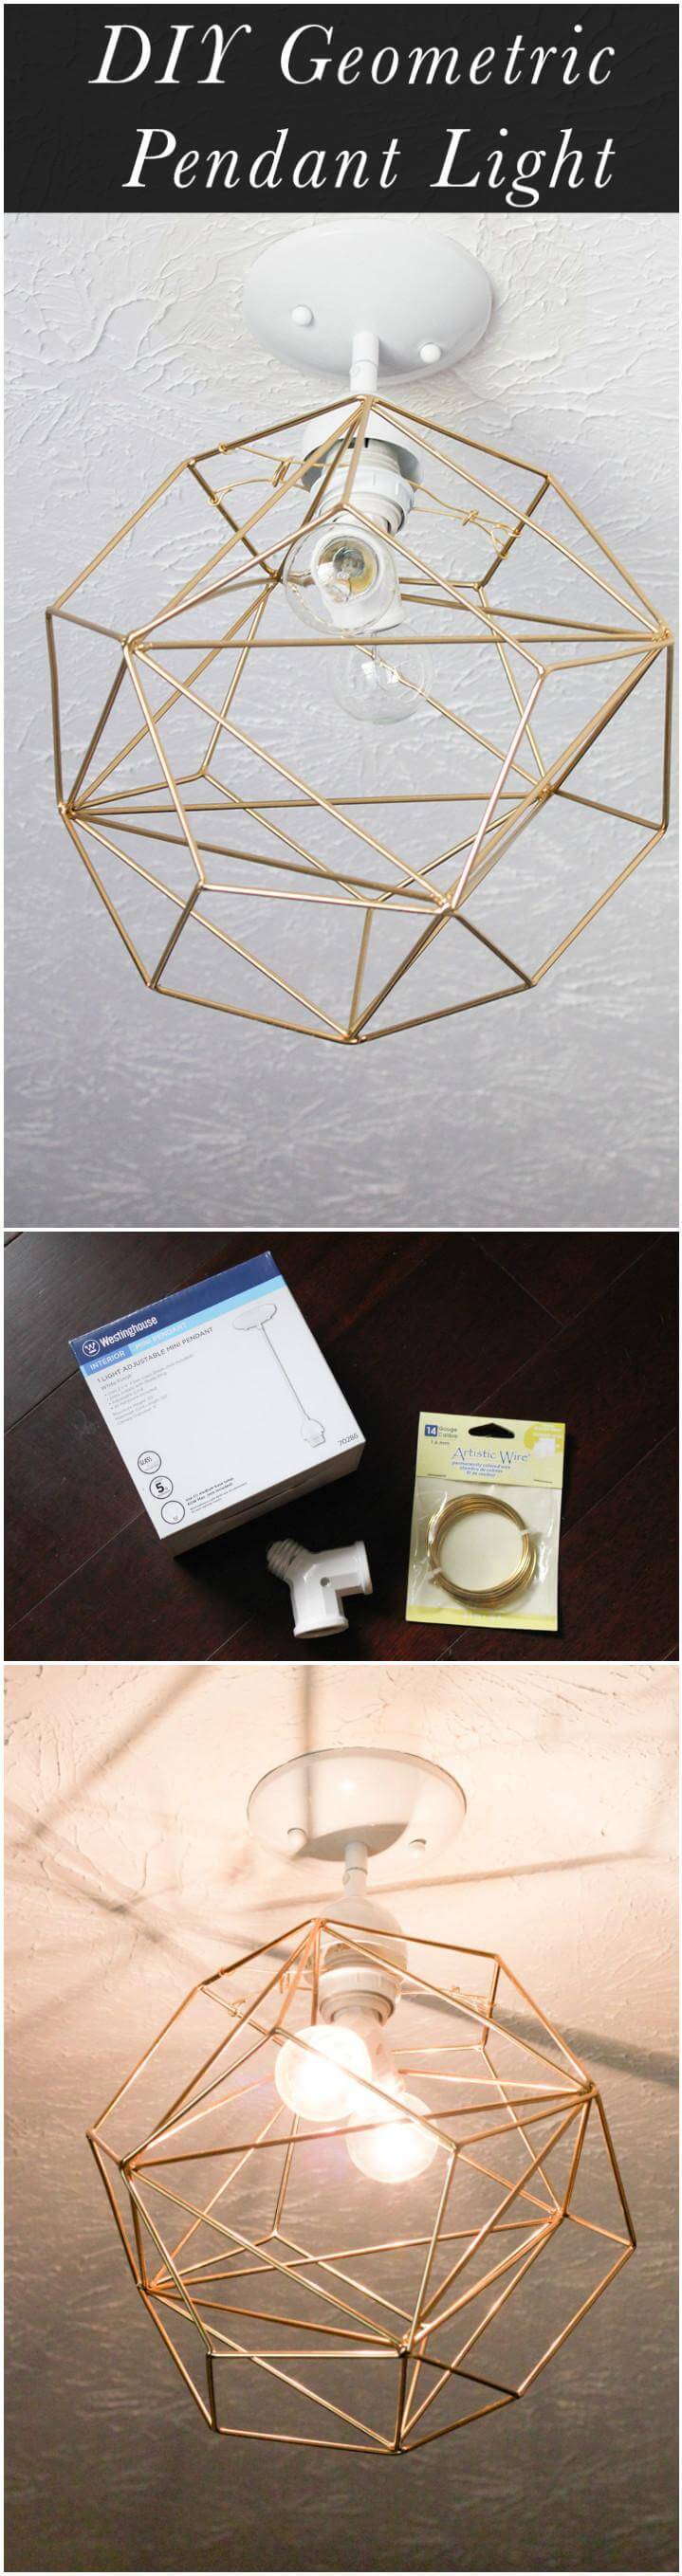 handmade geometric pendant light